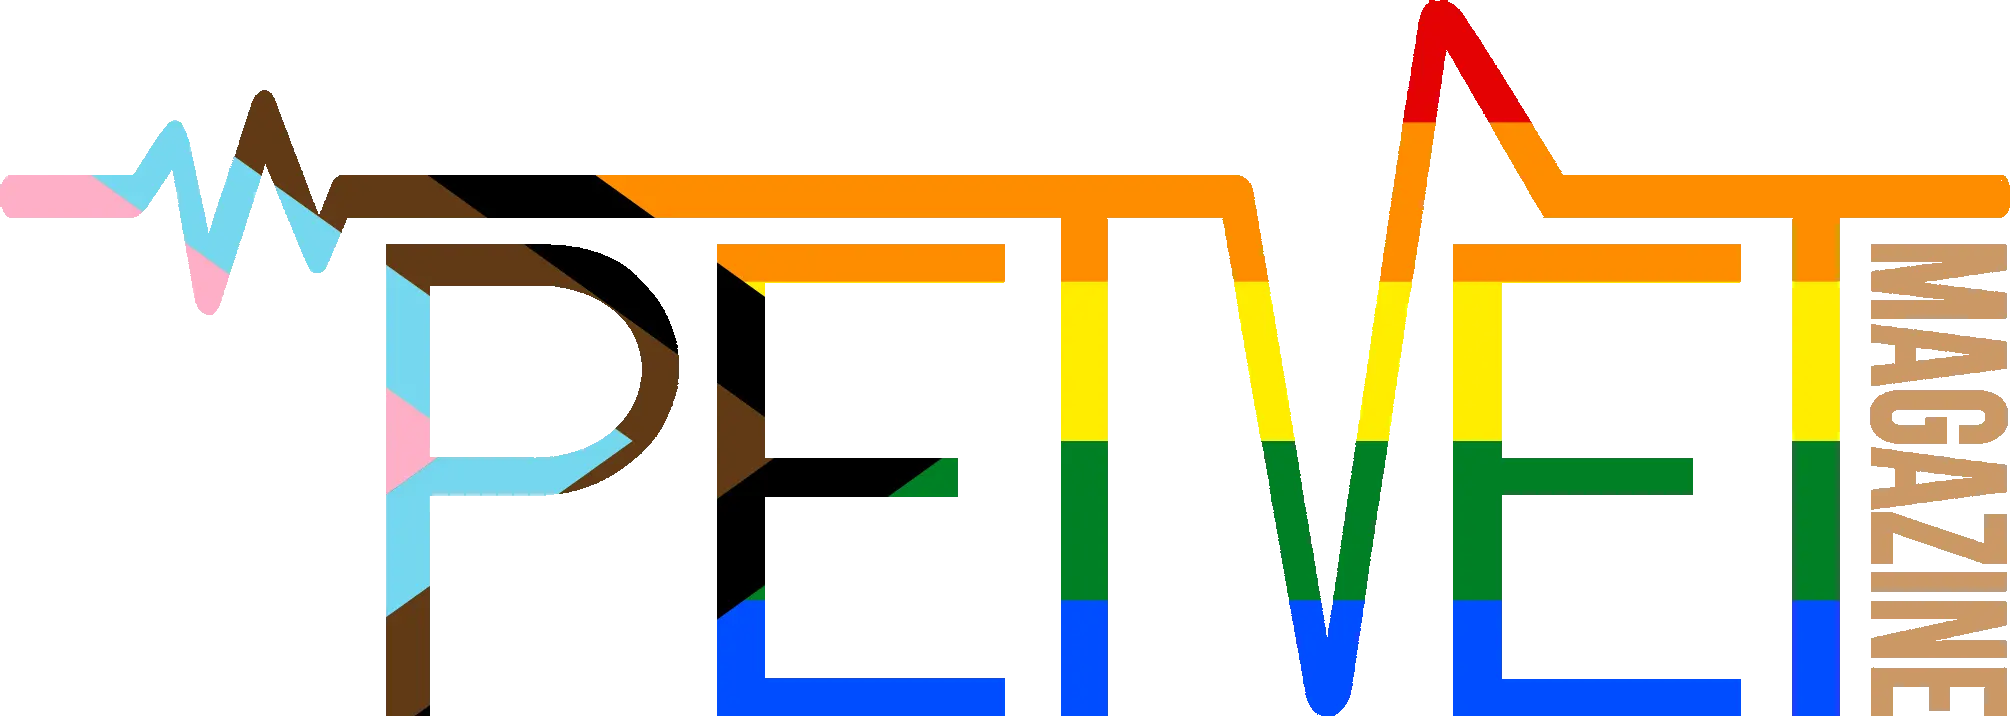 Pet Vet Magazine logo